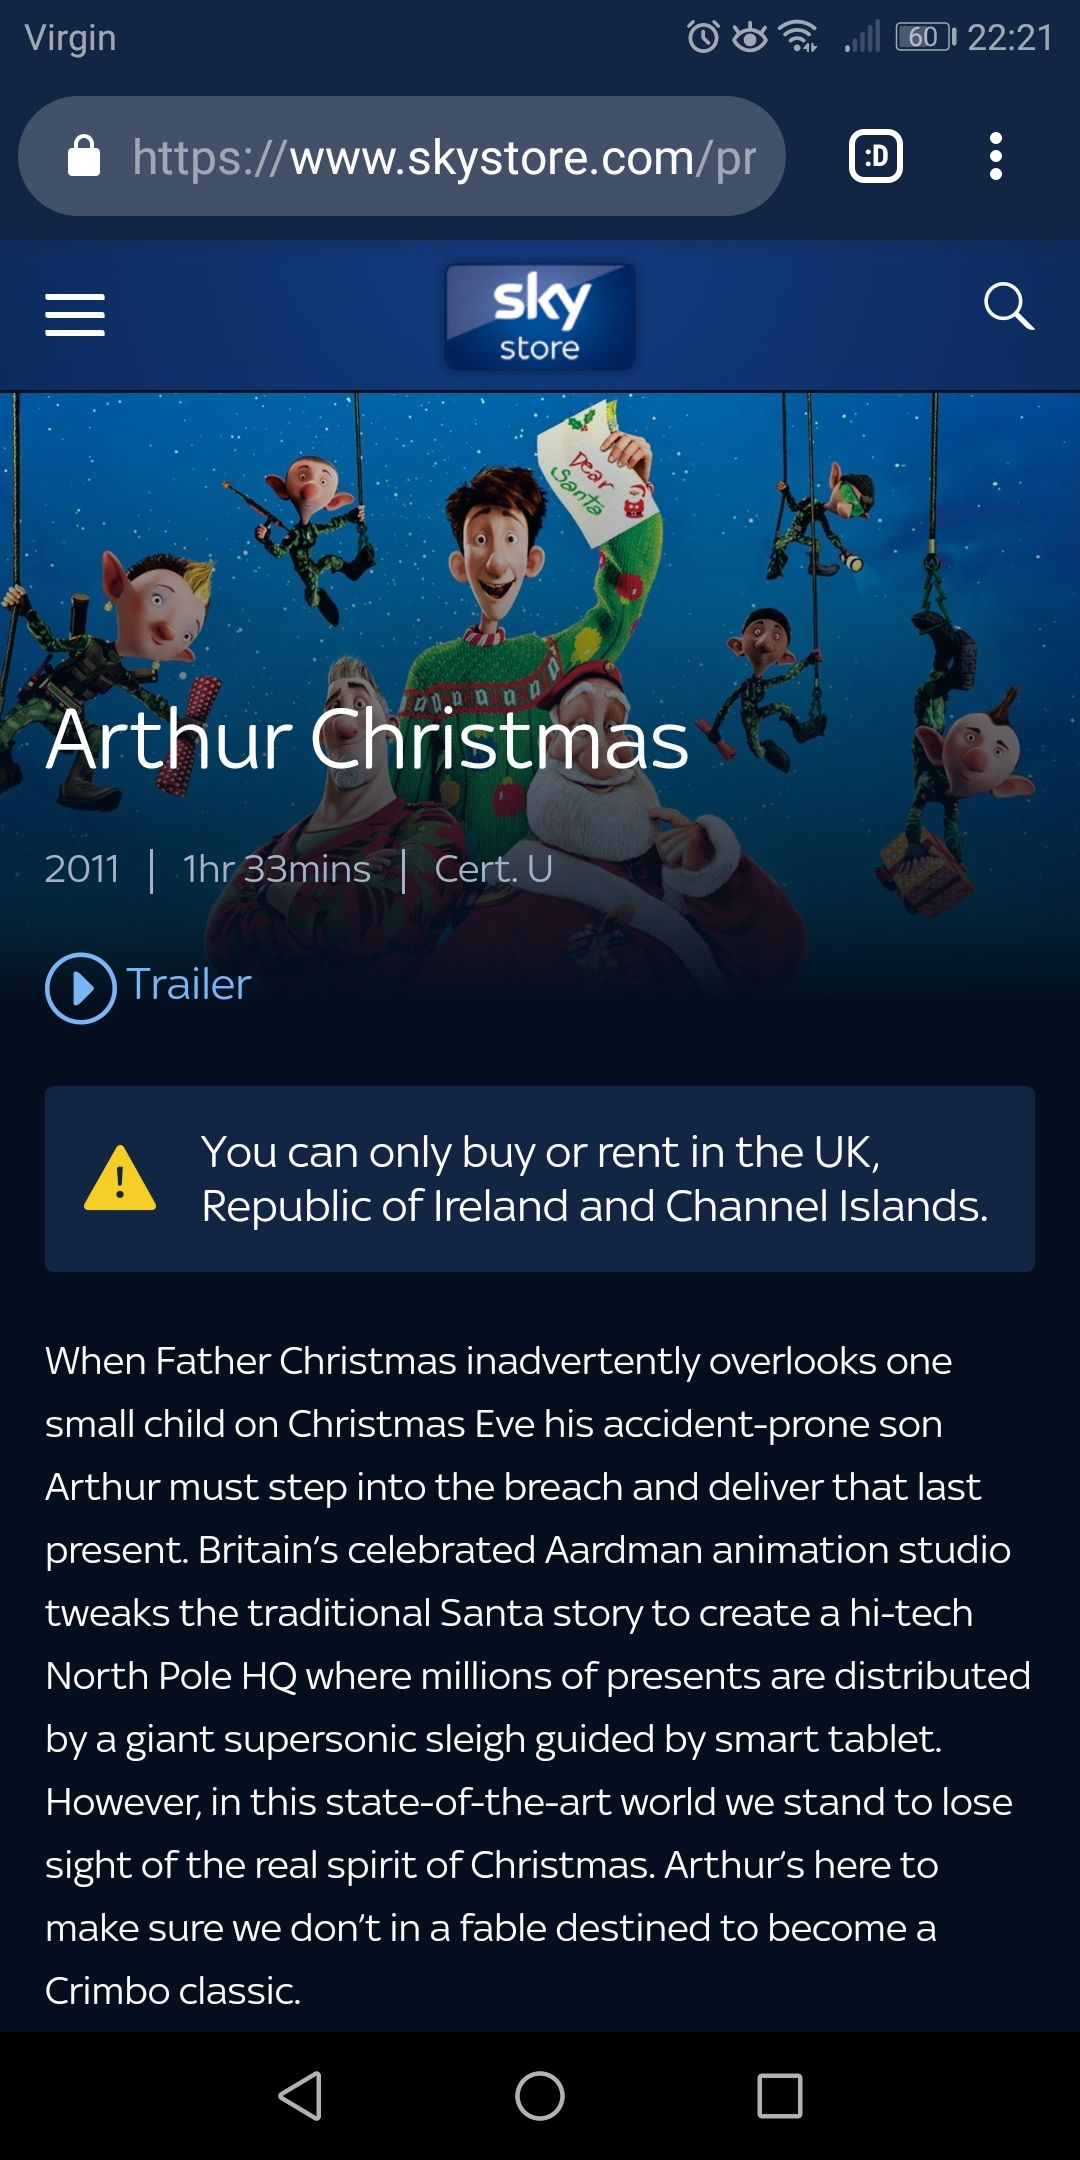 download arthur christmas movie free